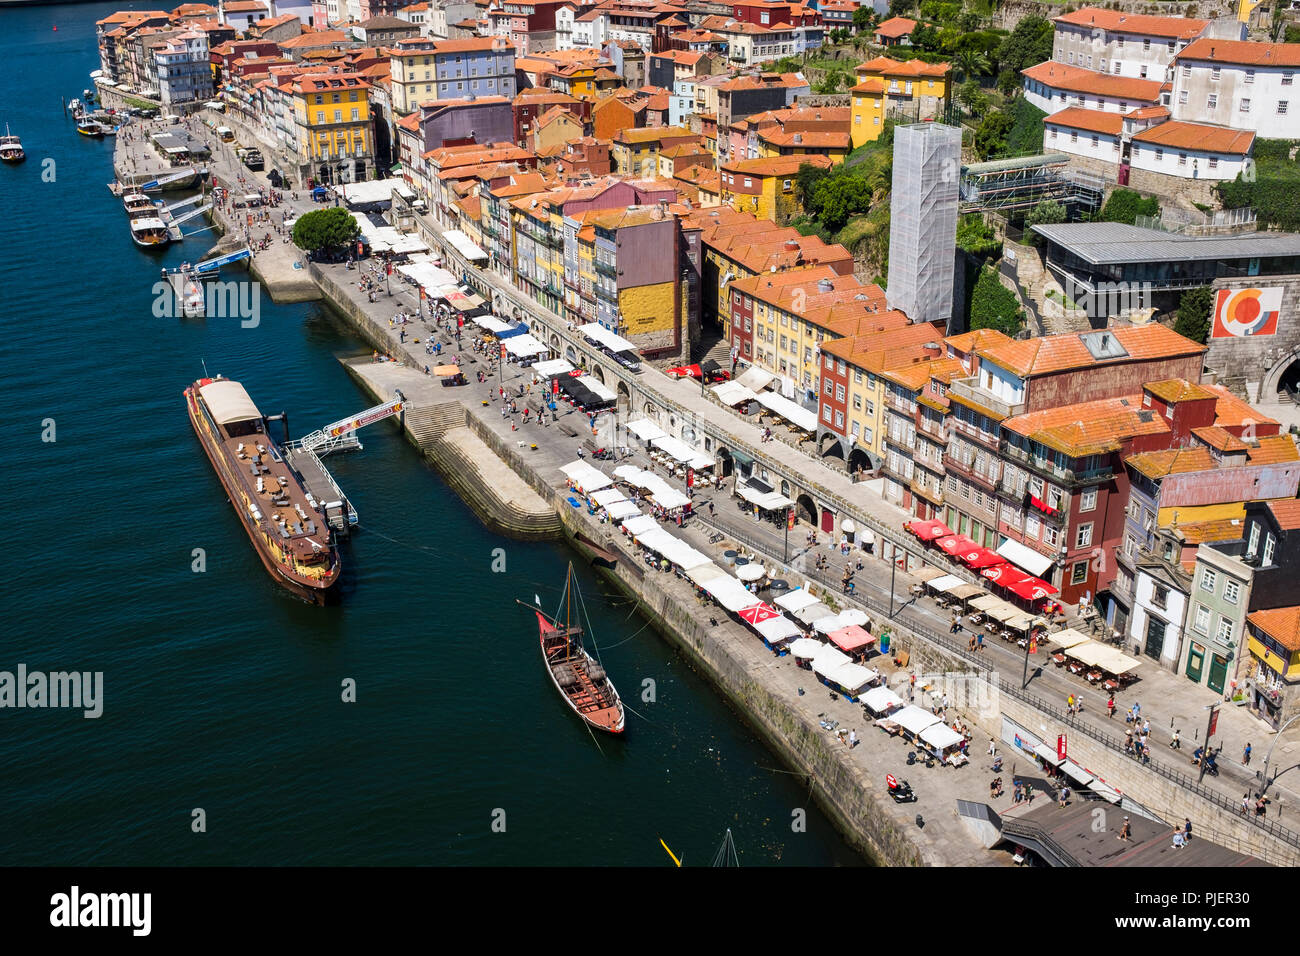 The Ribiera, from the Luis 1 bridge, Porto, Portugal. Stock Photo